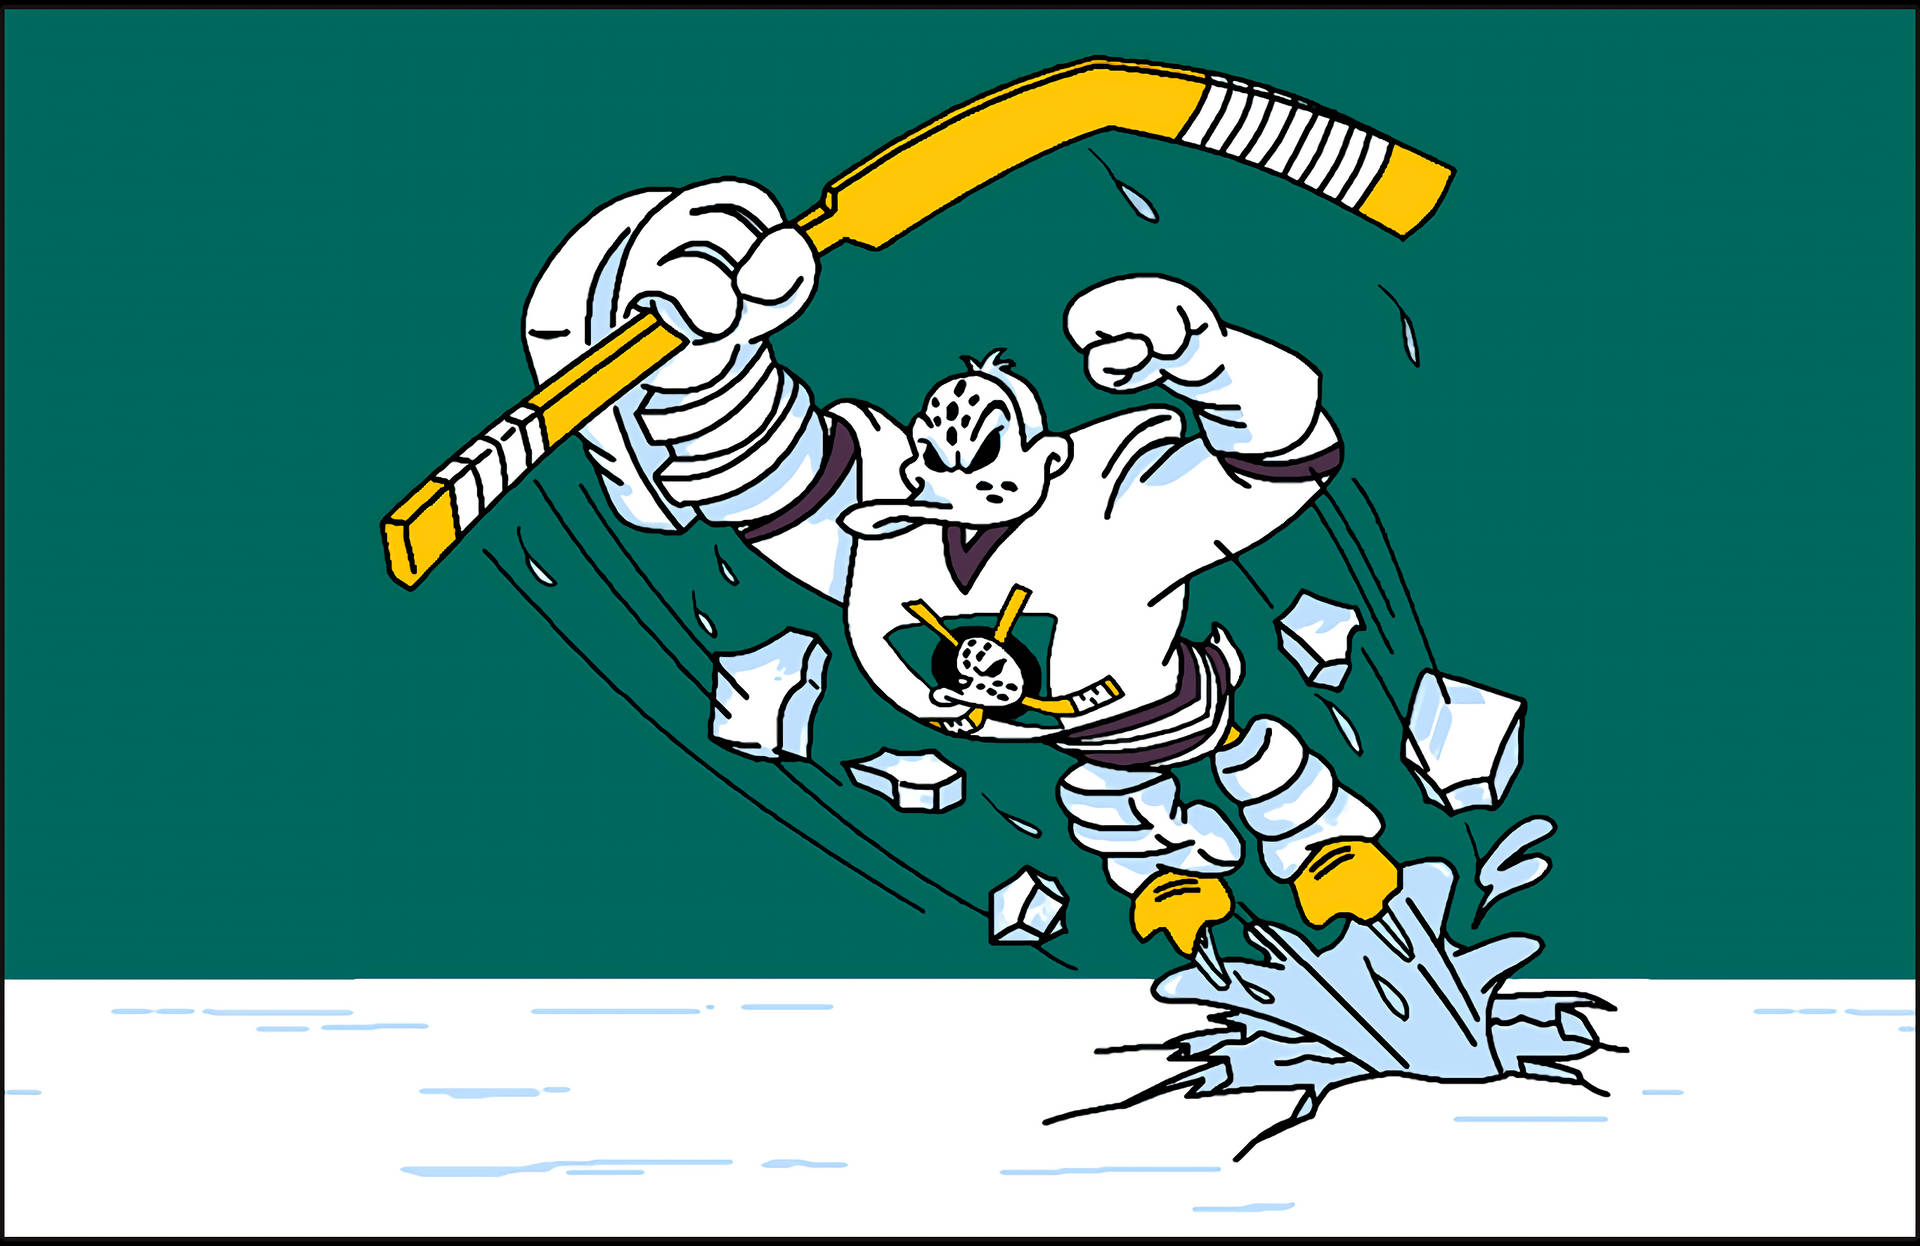 Caption: Celebrating Pride - Wild Wing, Anaheim Ducks Mascot Background